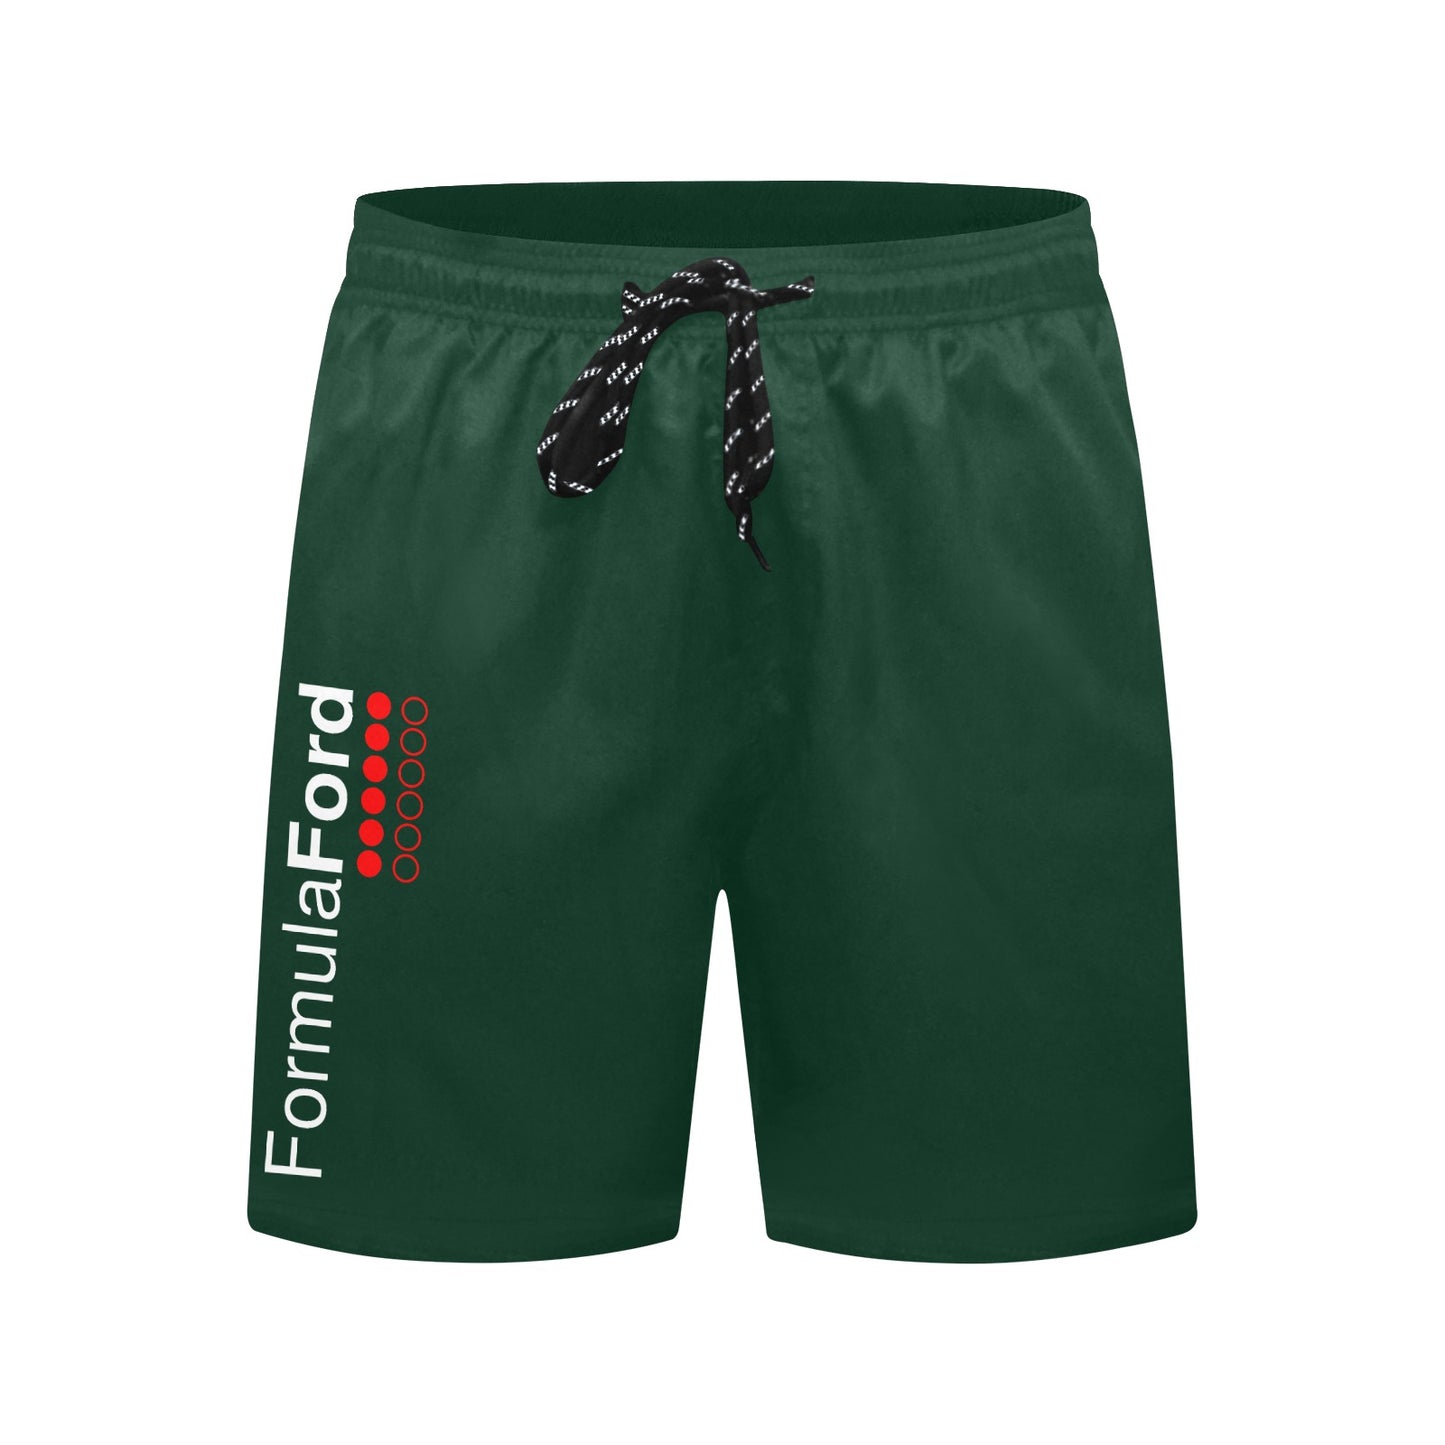 FORMULA FORD Official Mid-Length Shorts - British Racing Green